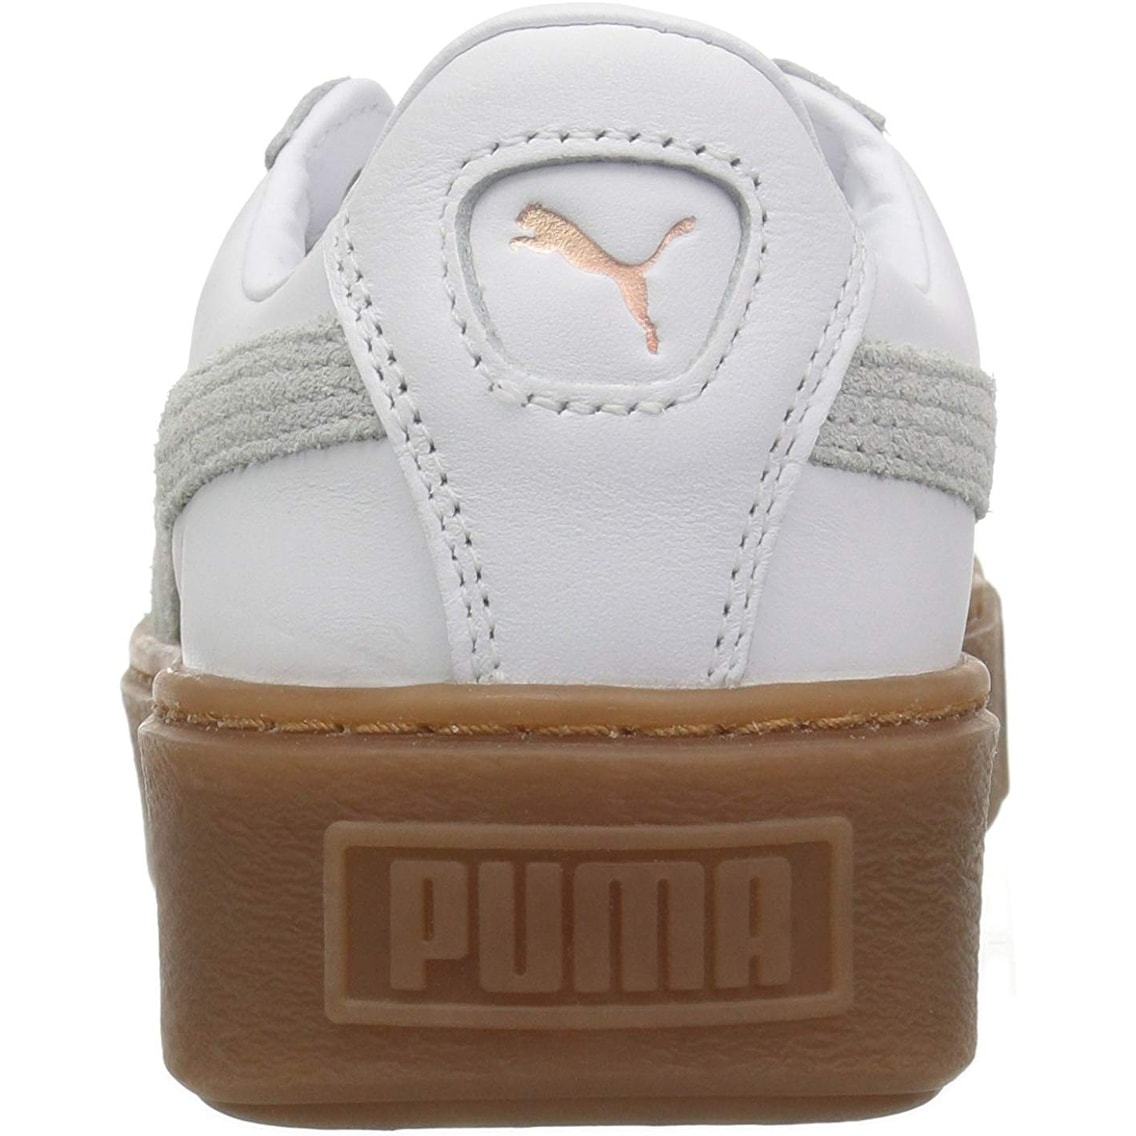 puma women's basket platform euphoria gum sneaker